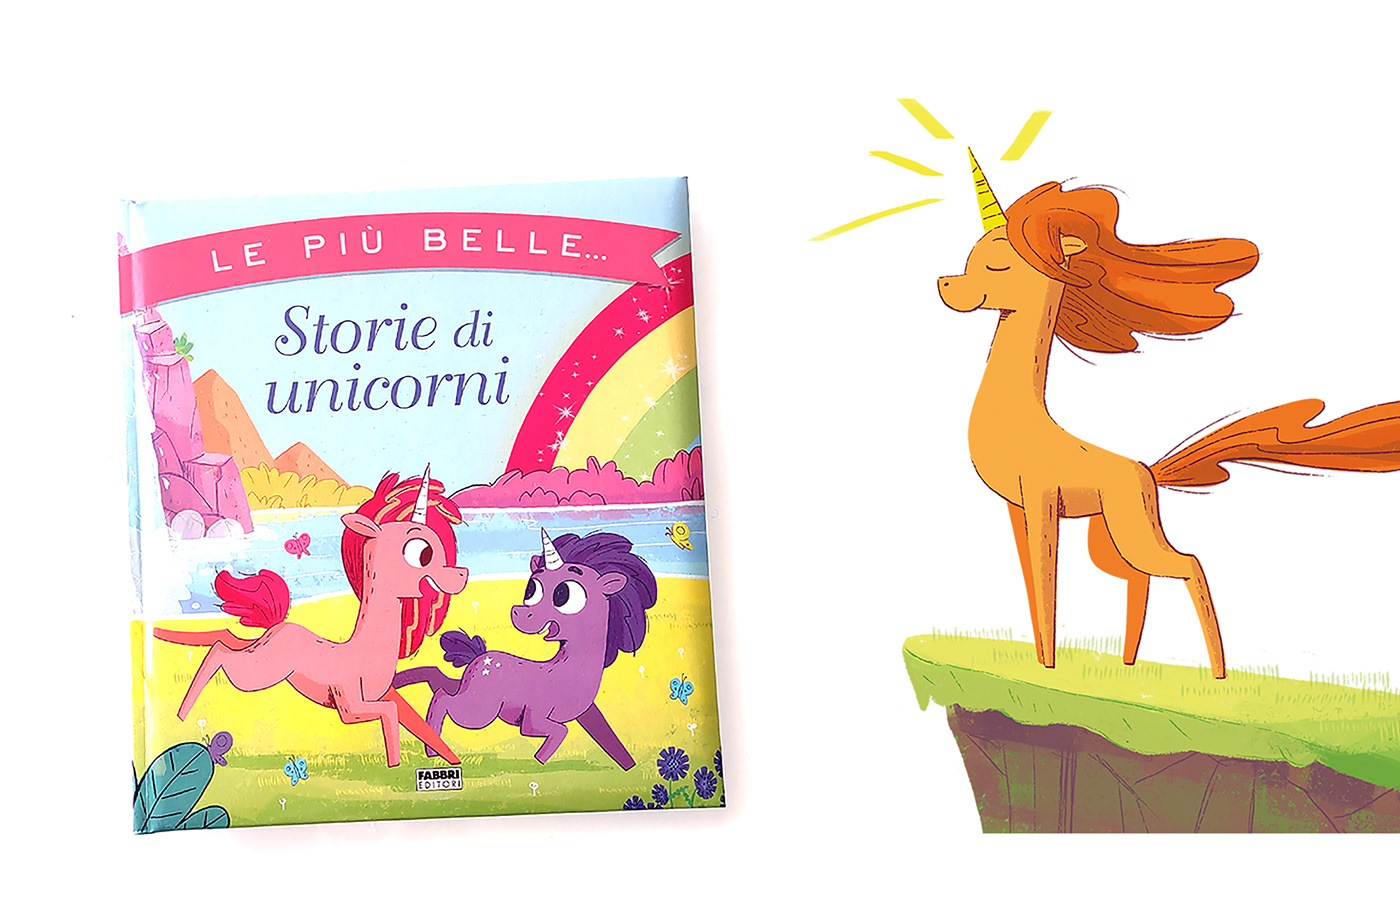 Children's book. Unicorn stories